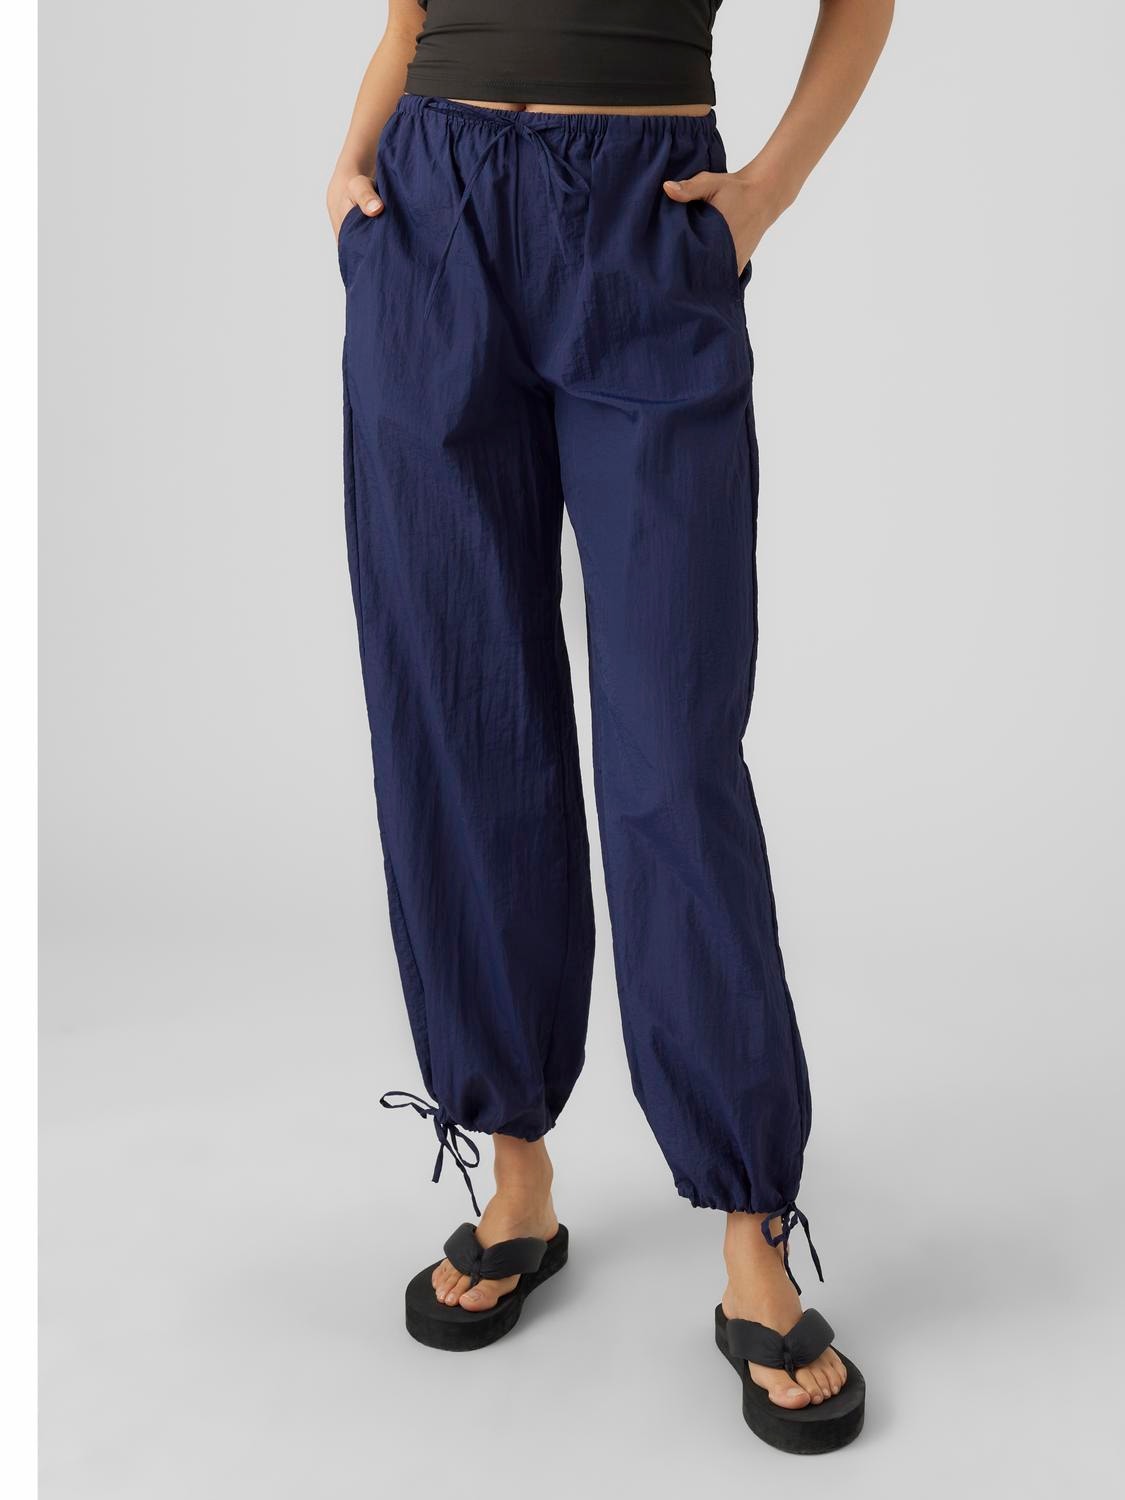 Vero Moda VMSADIECAT Taille moyenne Pantalons de survêtement -Peacoat - 10293508